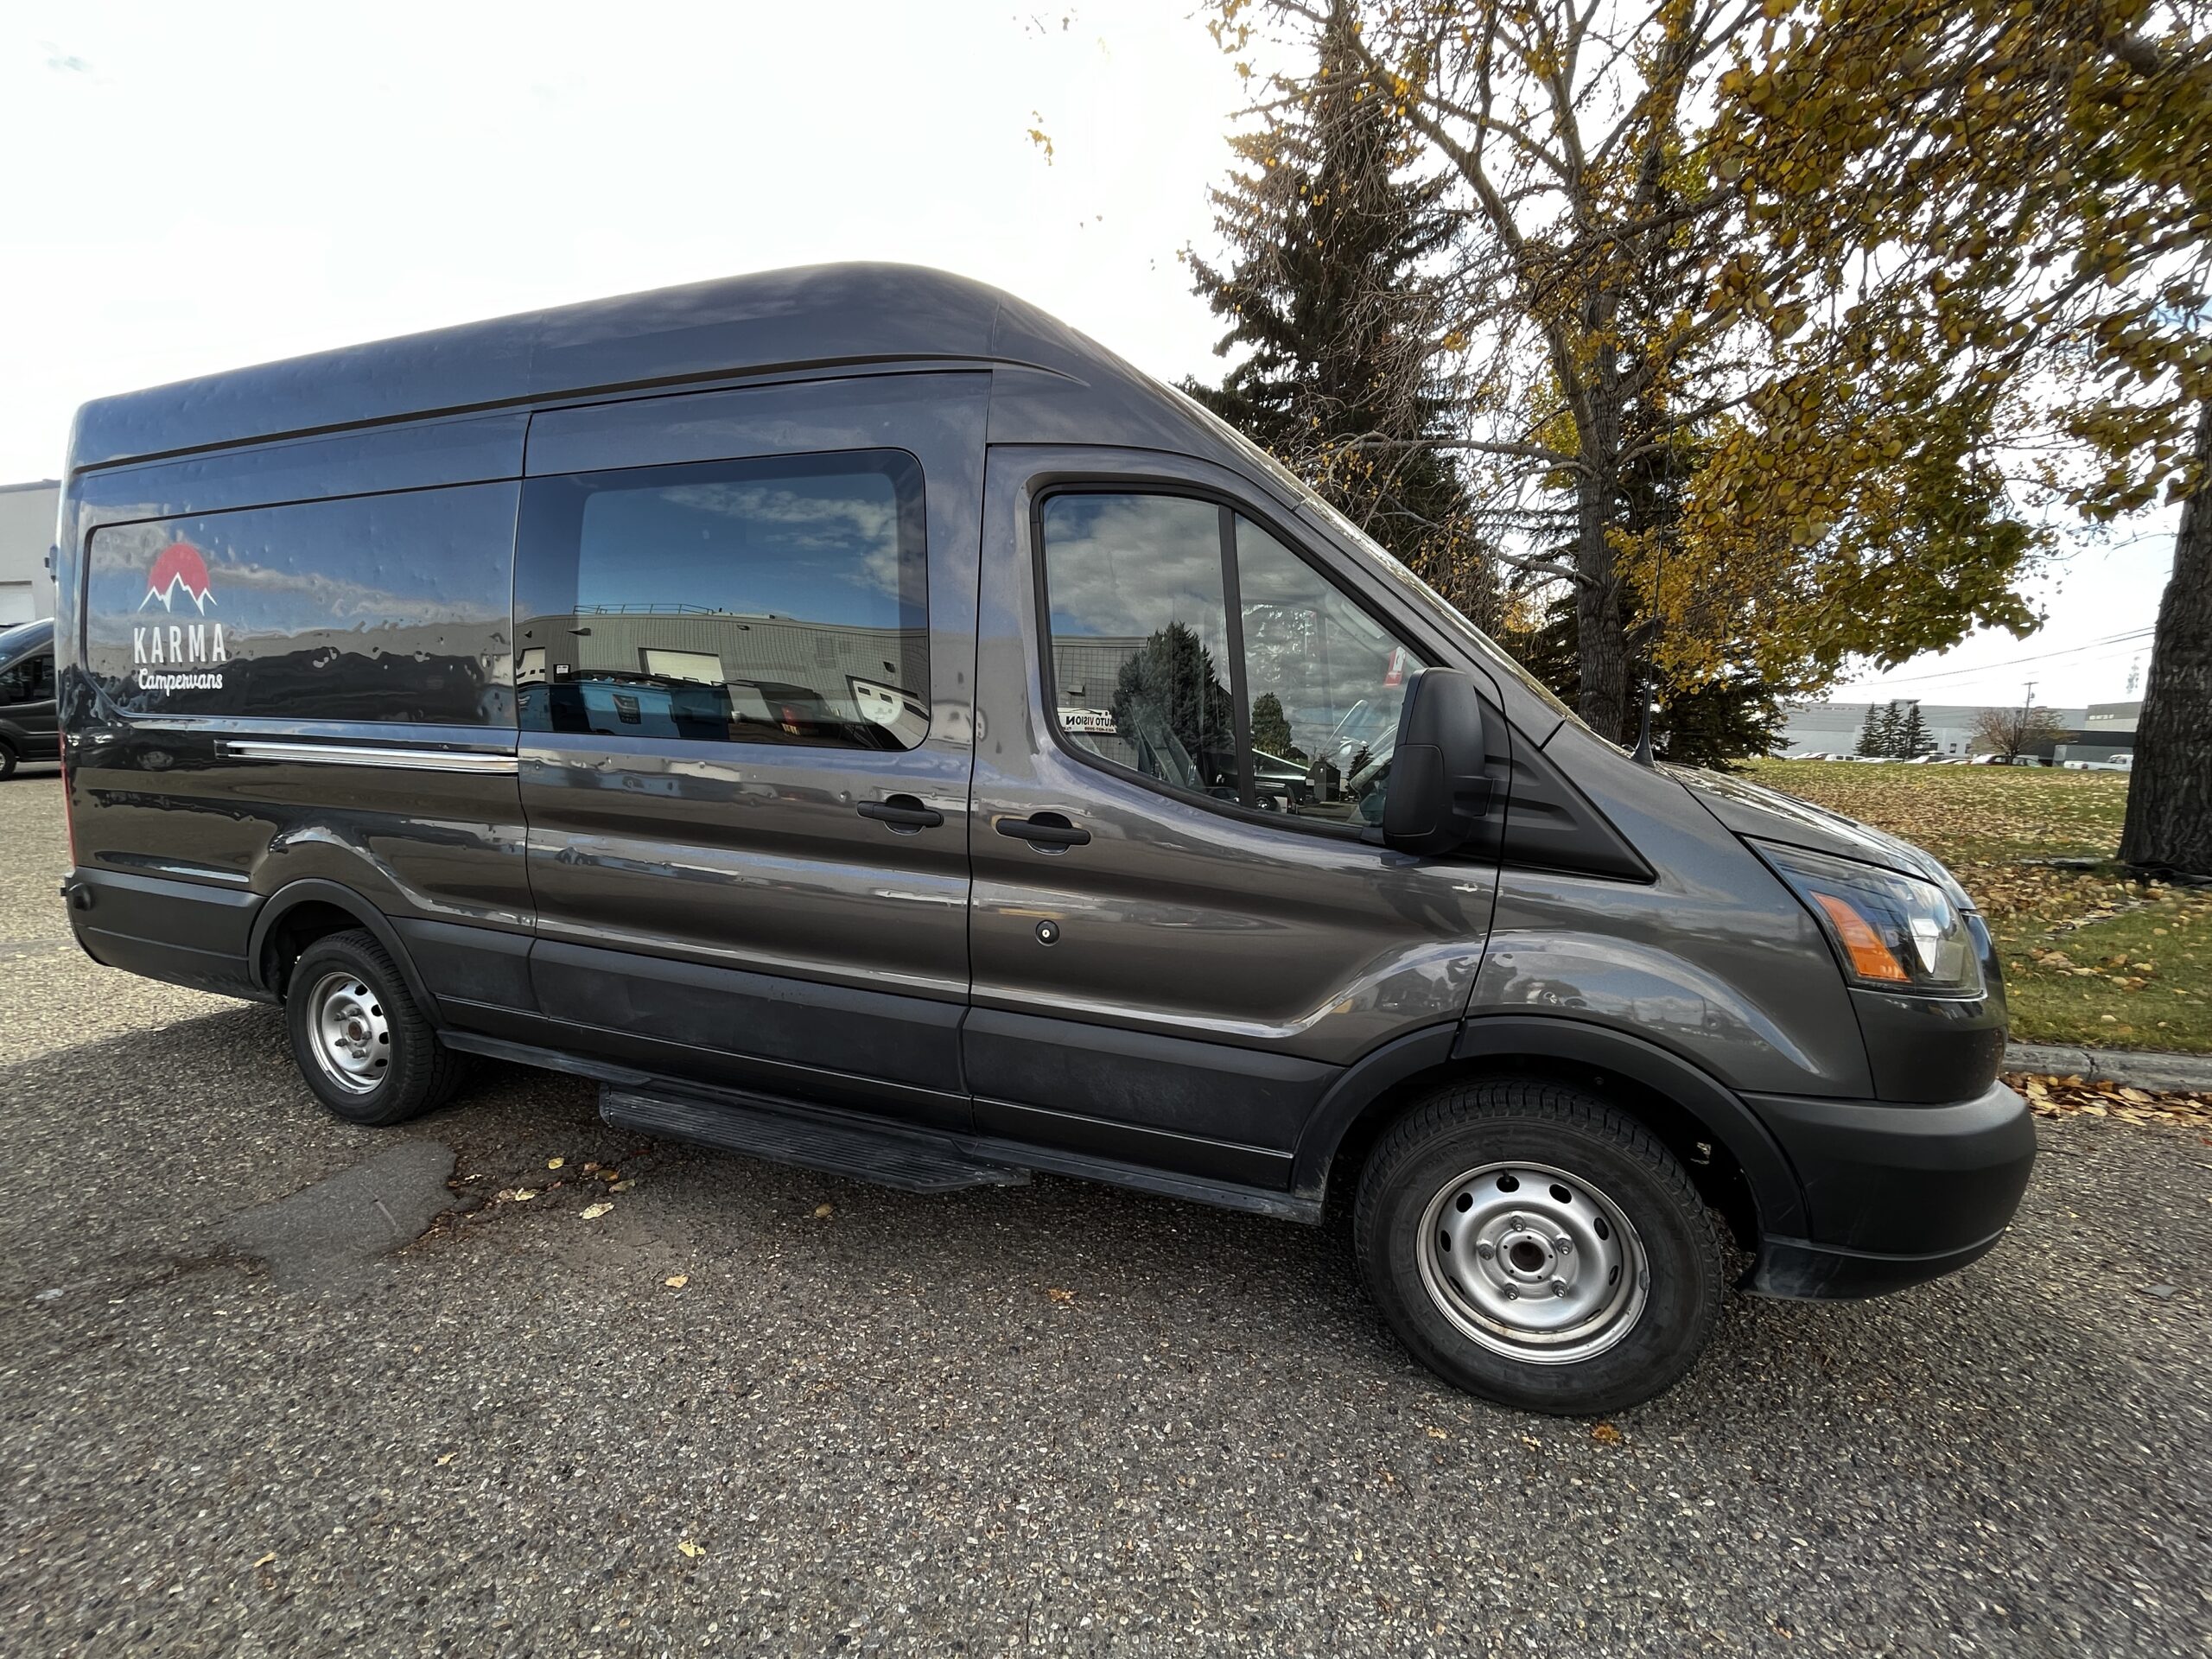 passenger side view of a grey camper van